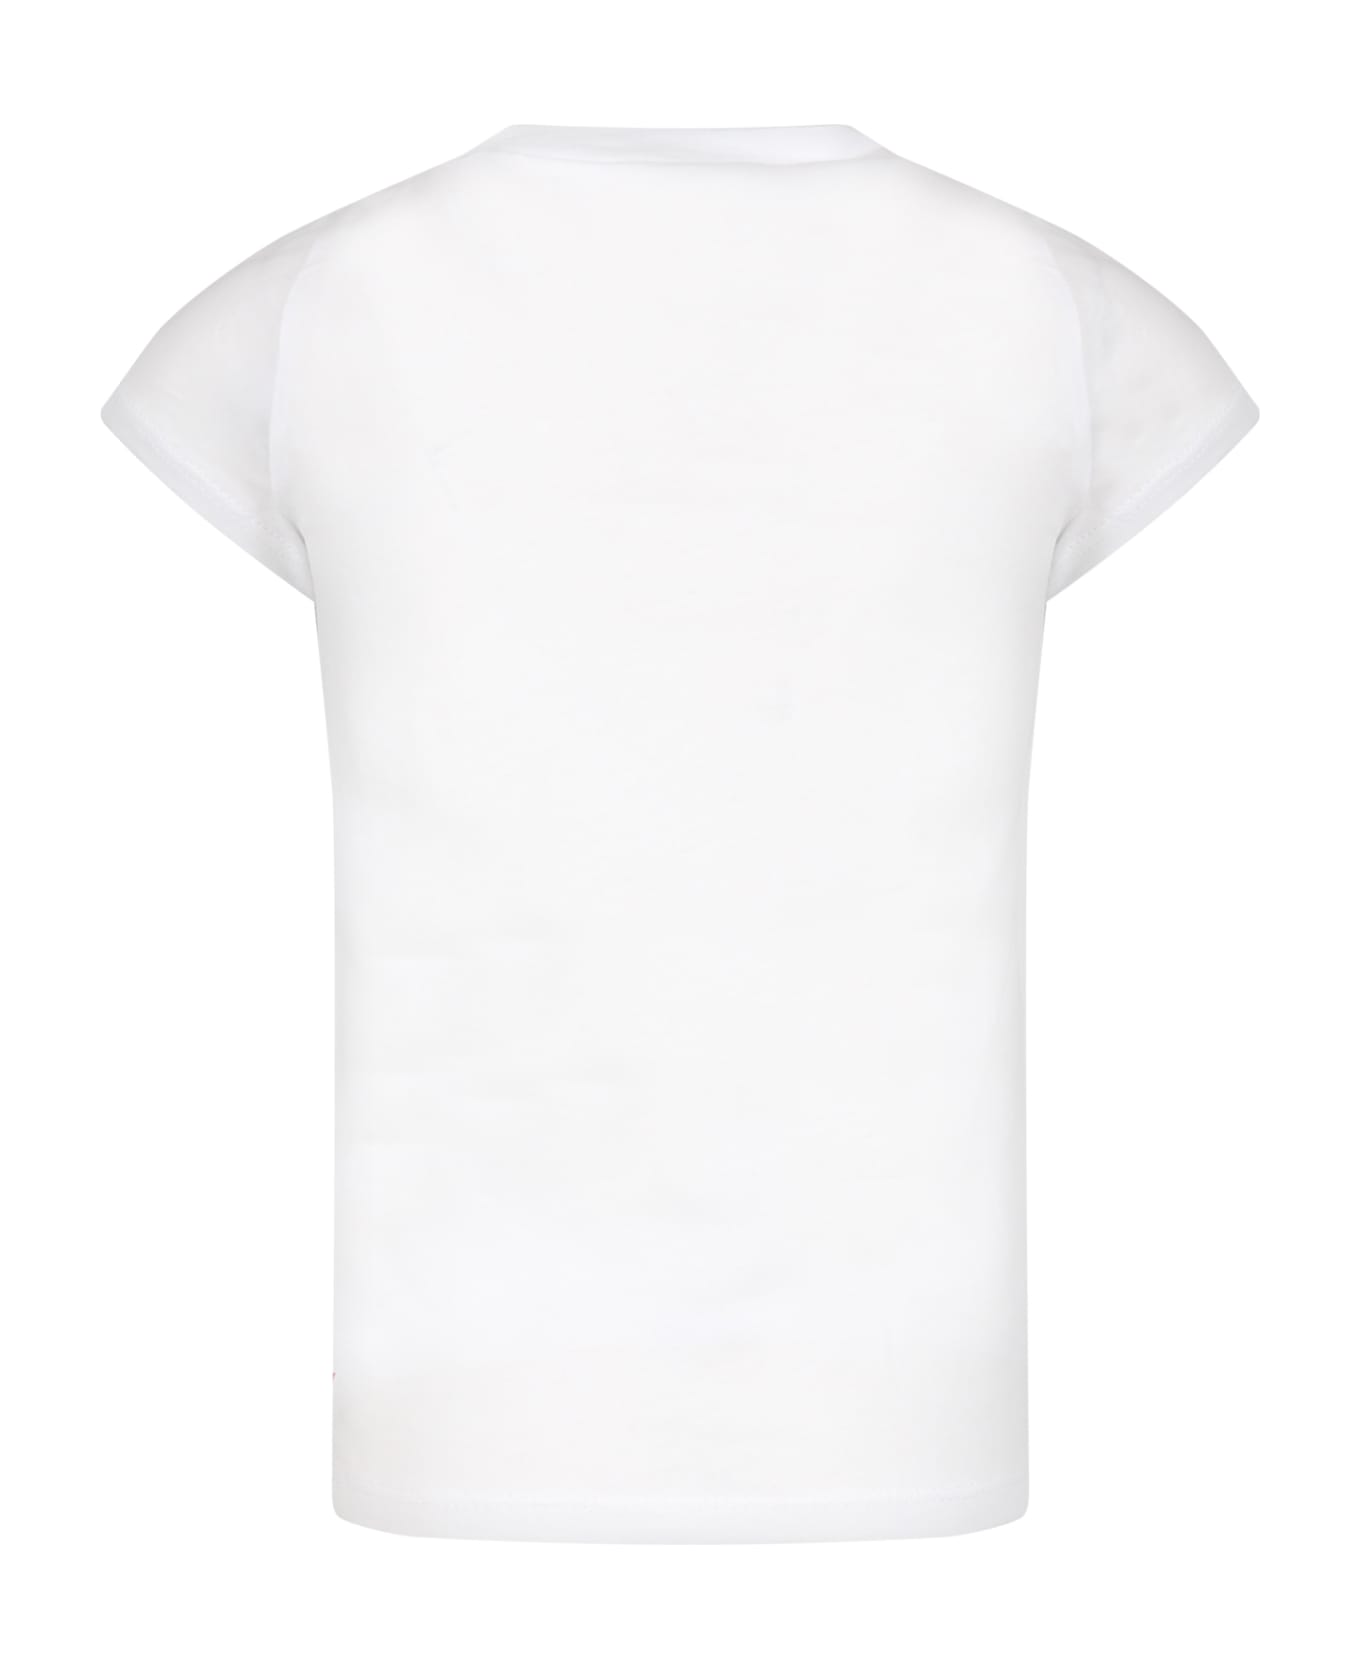 Levi's White T-shirt For Boy With Logo - White